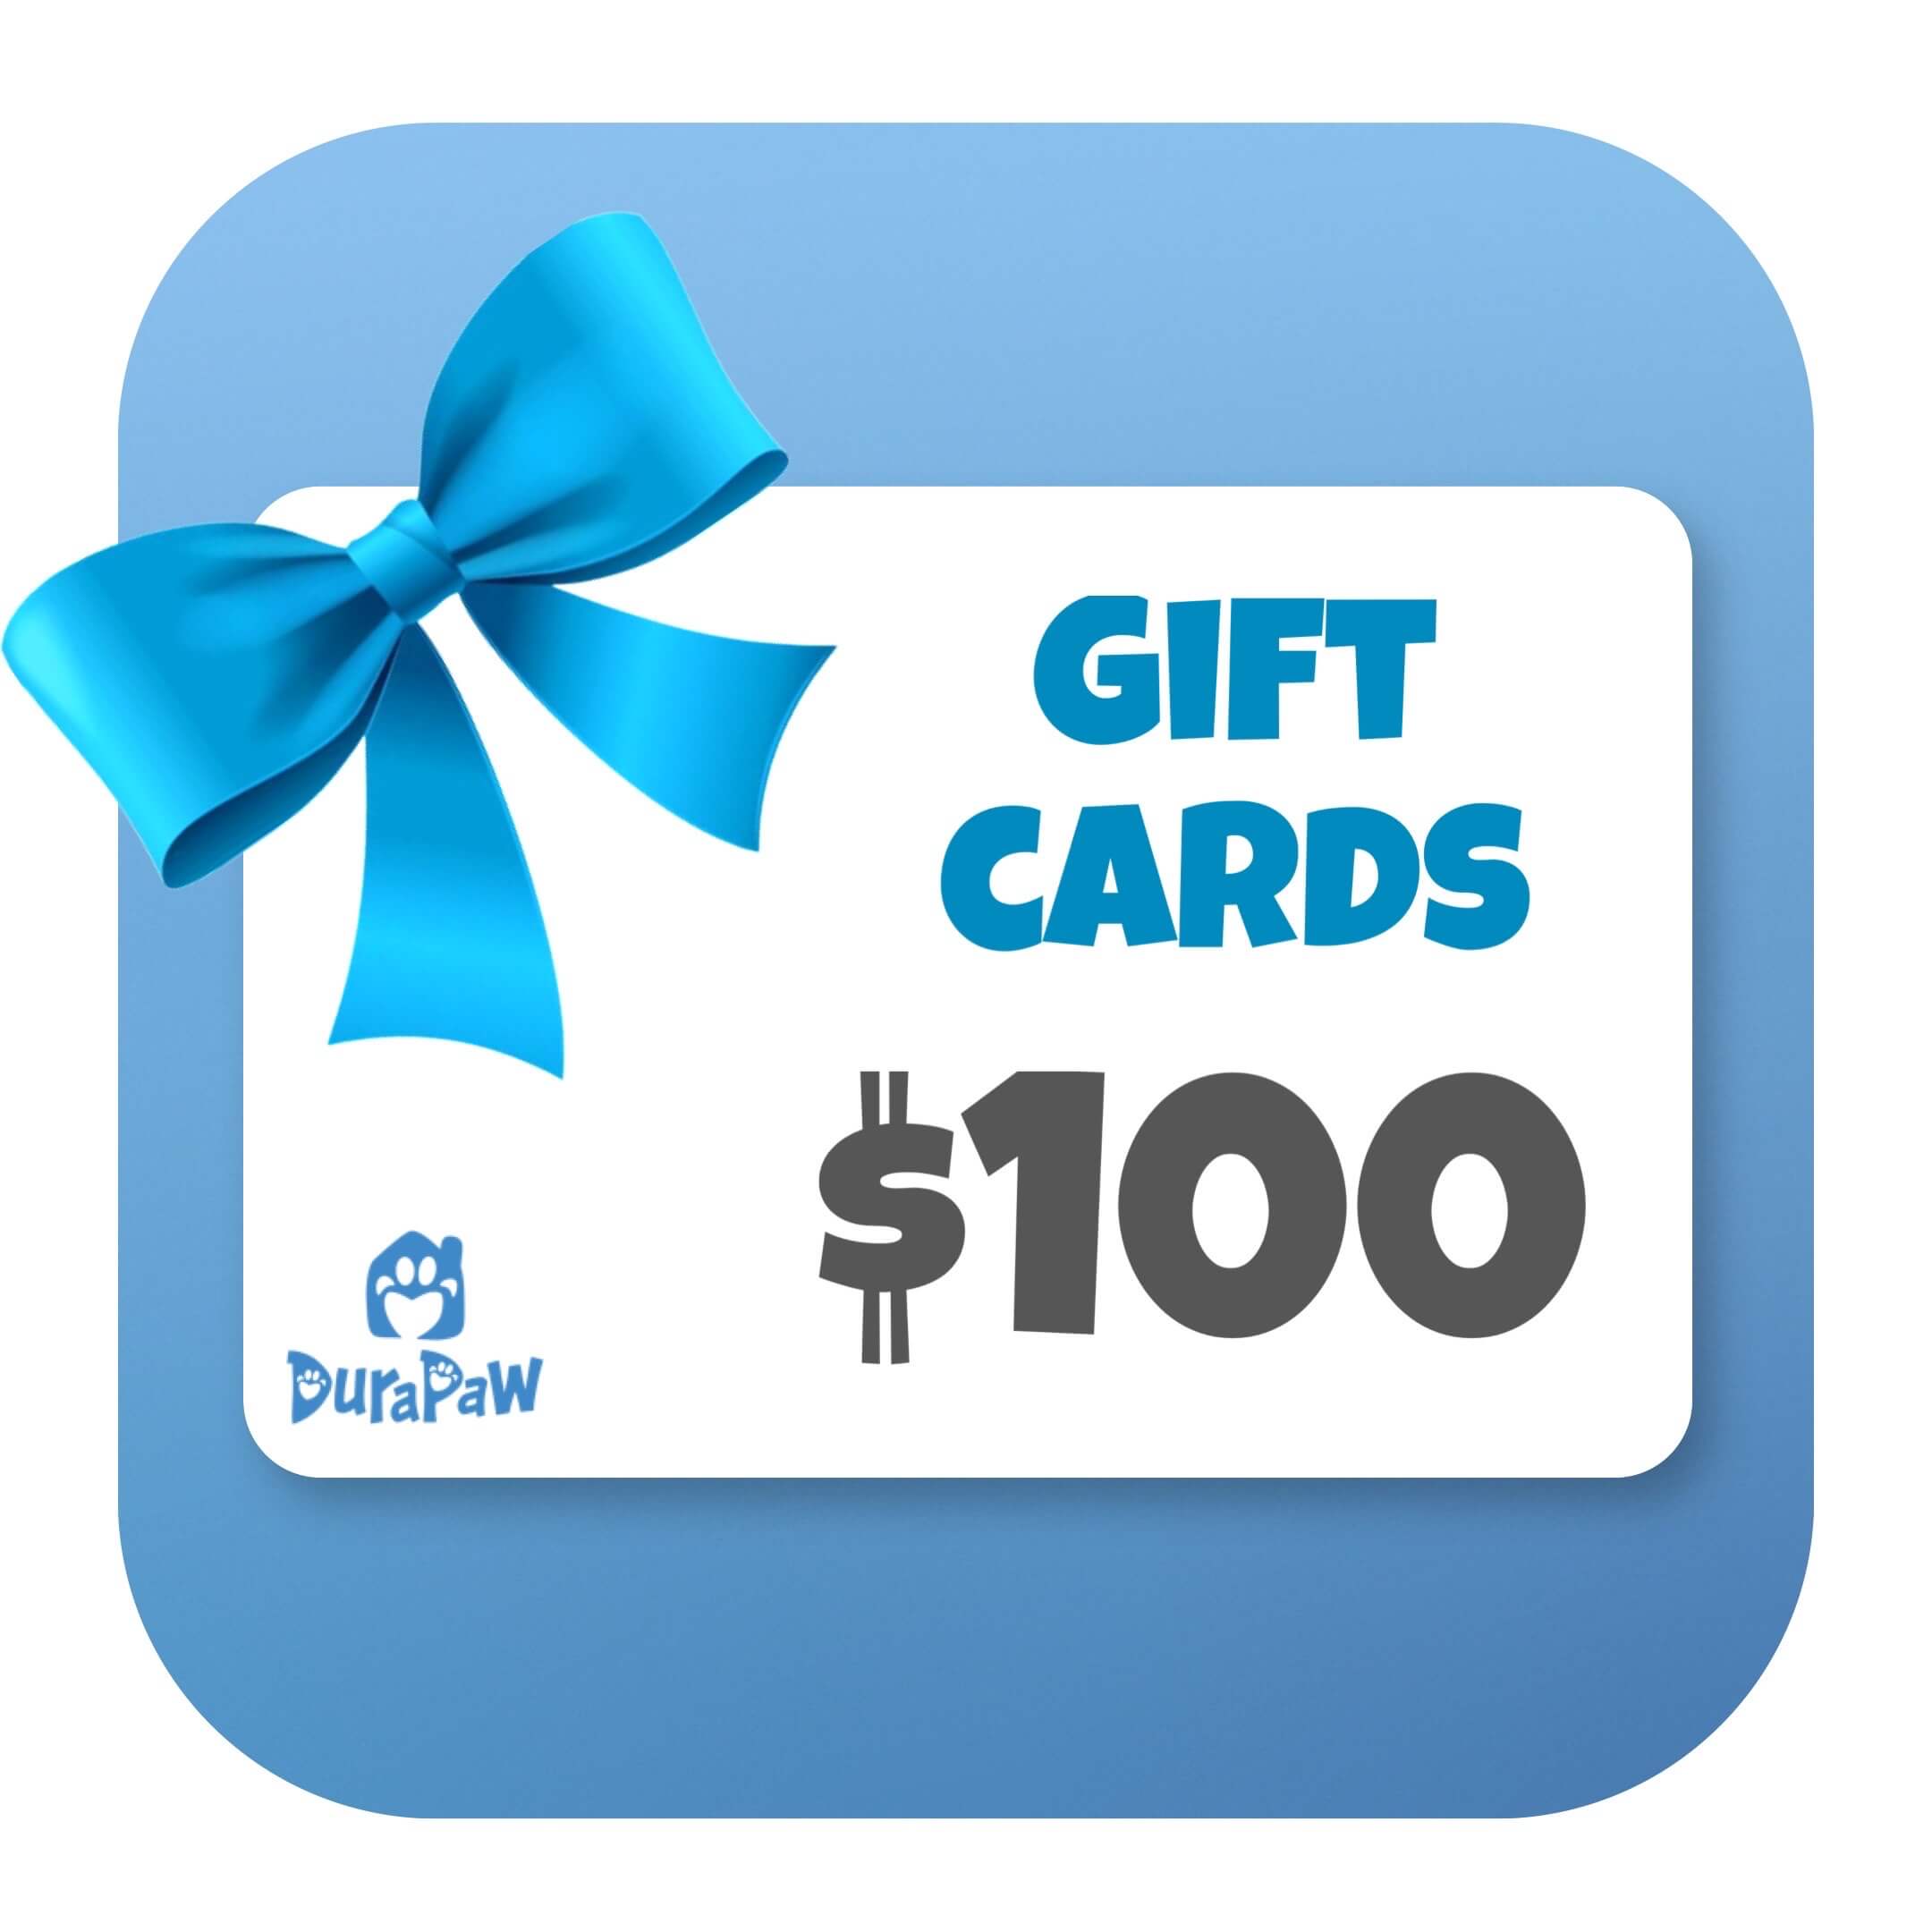 DuraPaw Dog Subscription Box Gift Card 100 Dollars